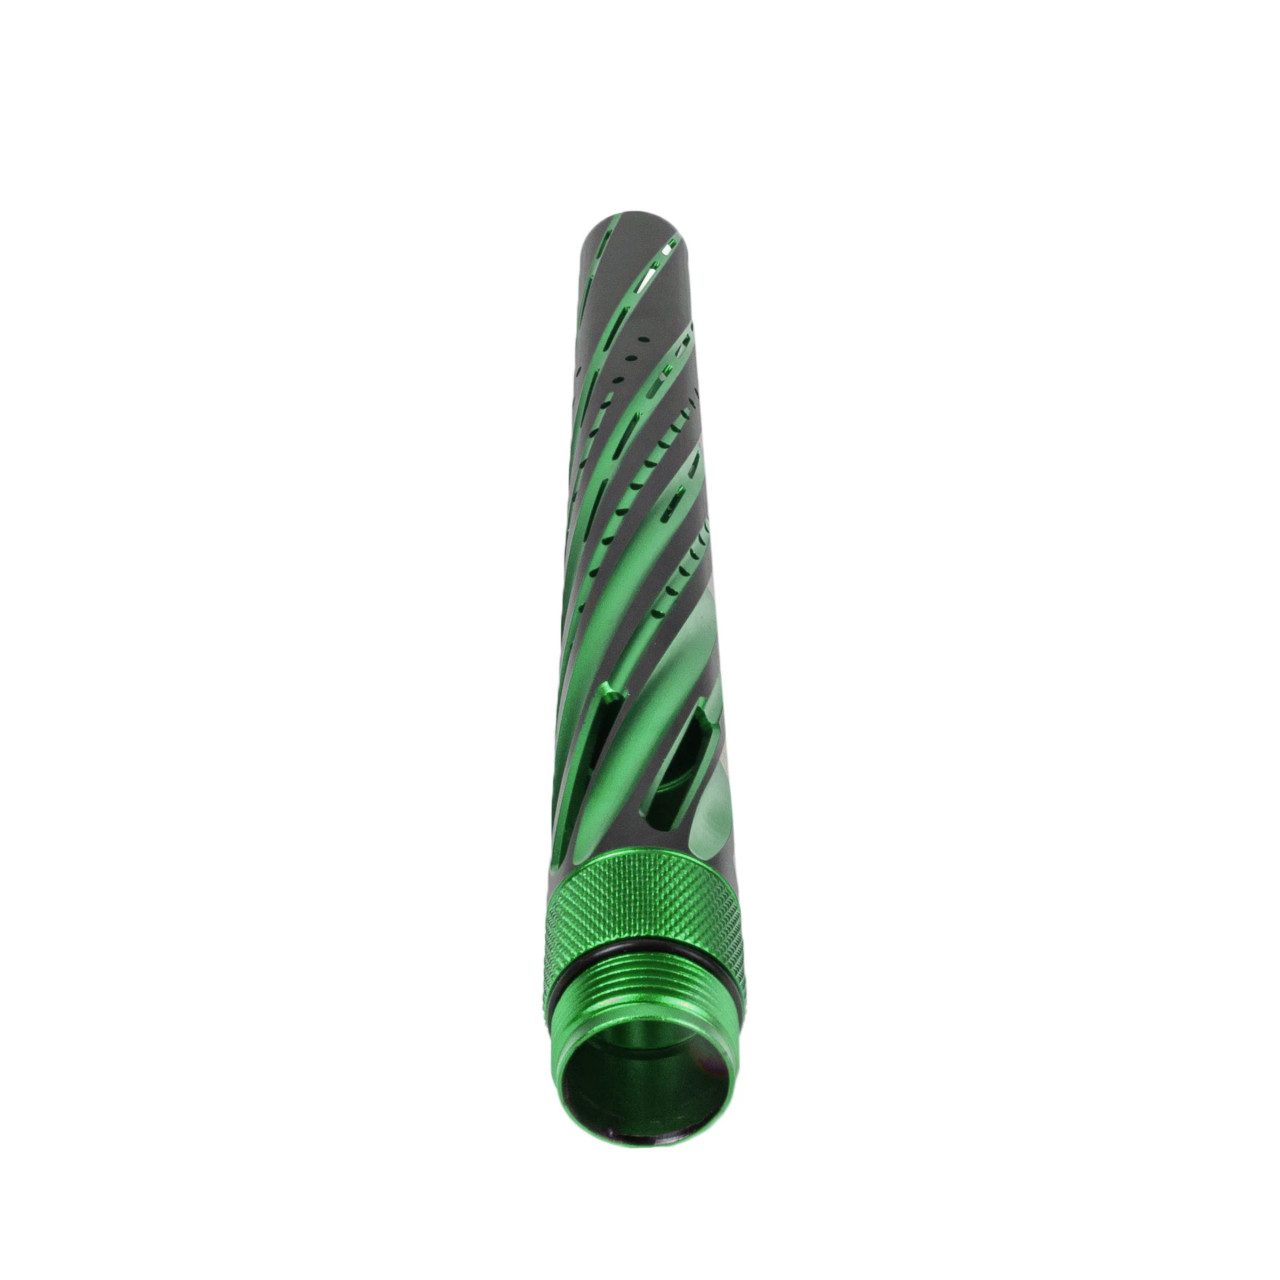 HK - LAZR S63 Tip - Orbit - Dust Green/Black